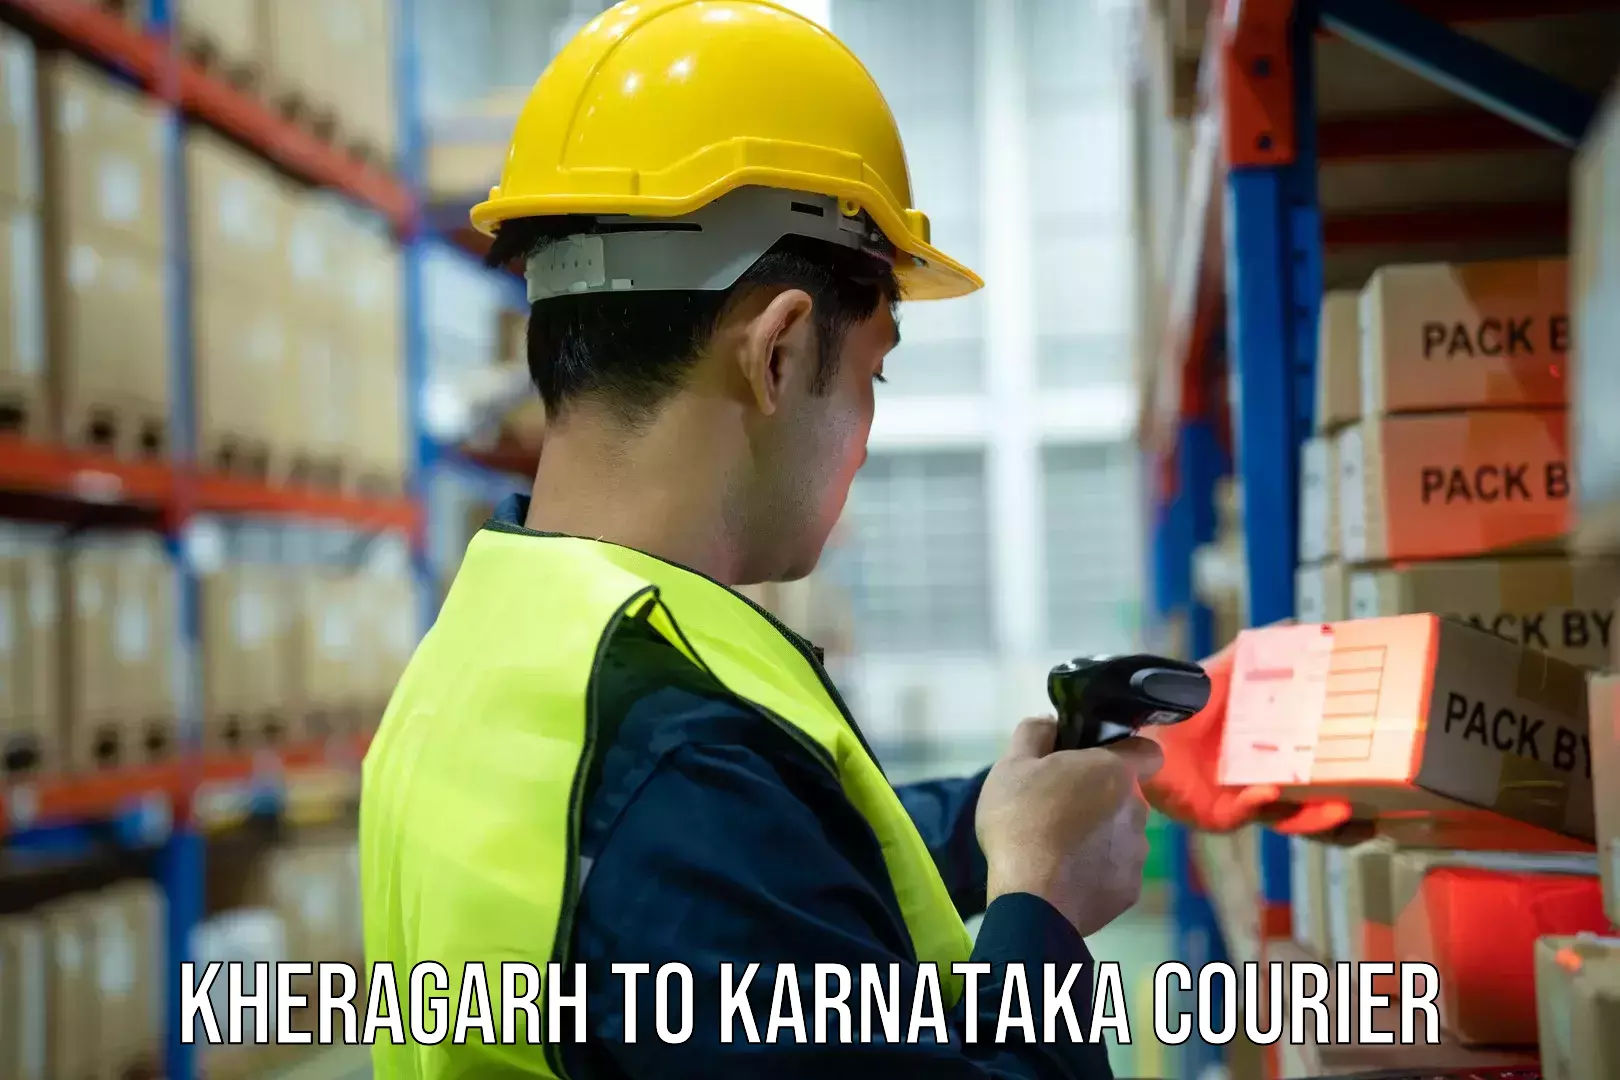 Courier service partnerships Kheragarh to Belgaum